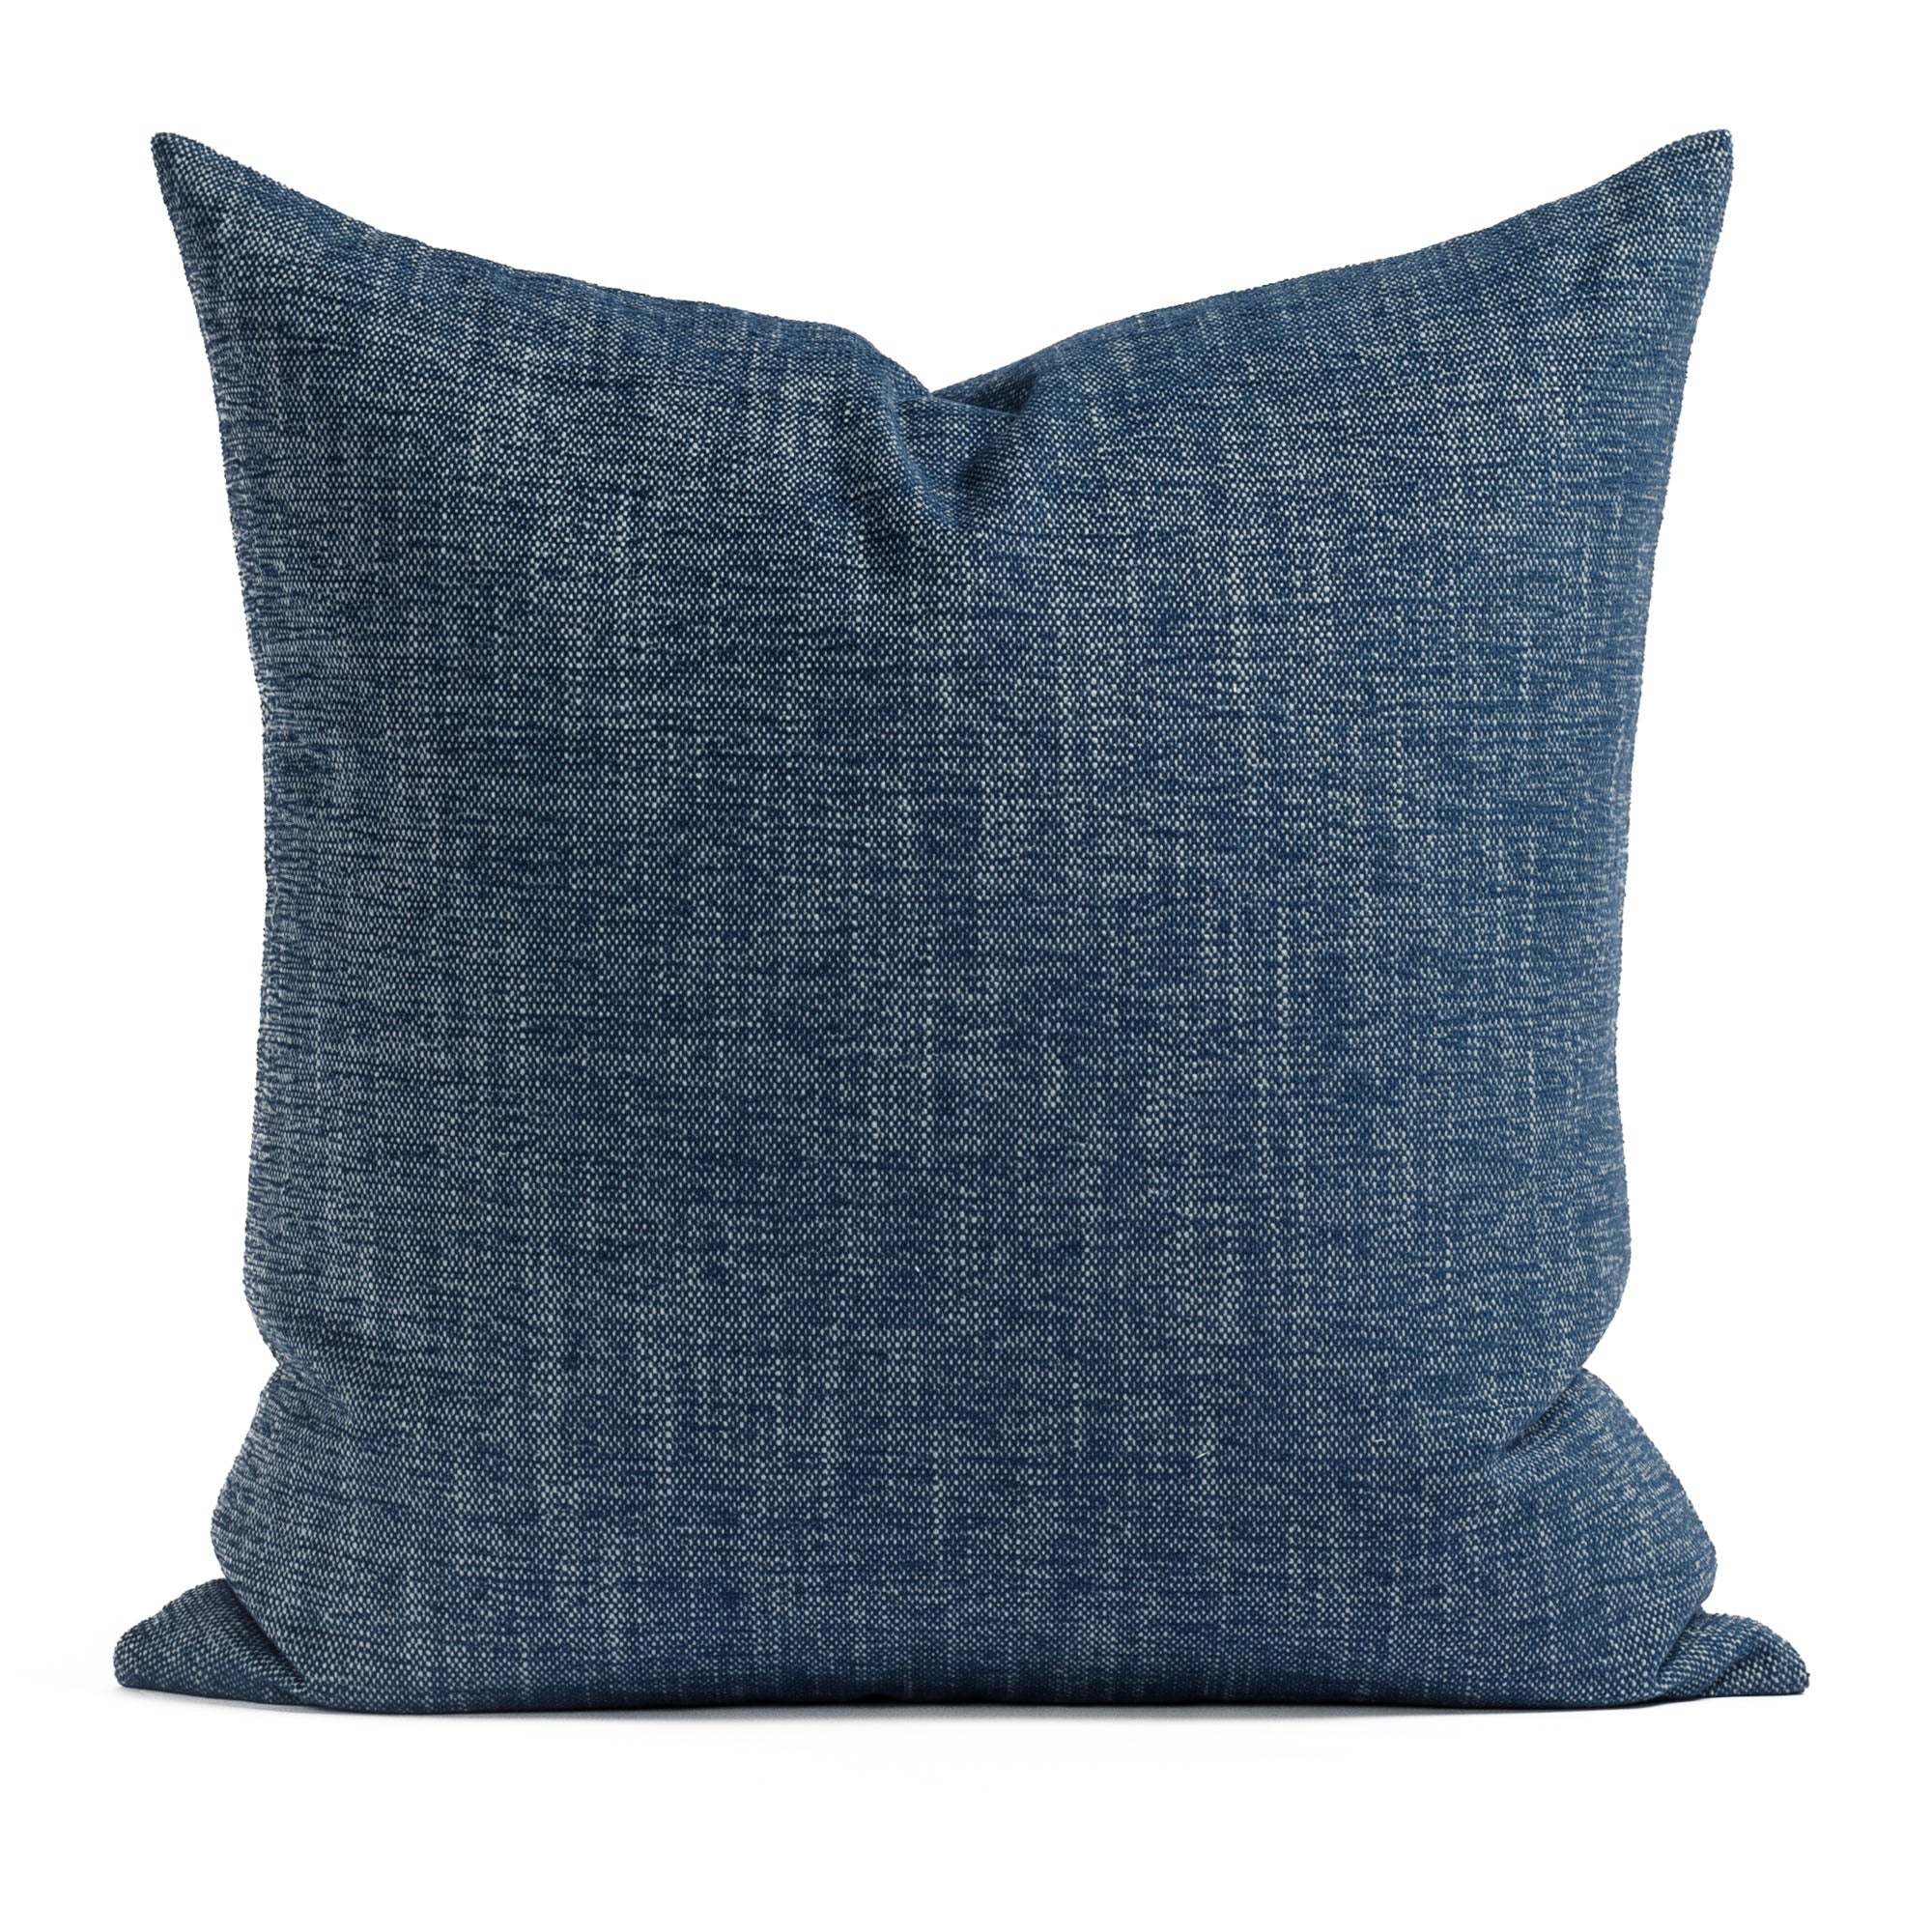 Parker 22x22 Indoor Outdoor Pillow Indigo, an indigo blue outdoor Tonic Living throw pillow